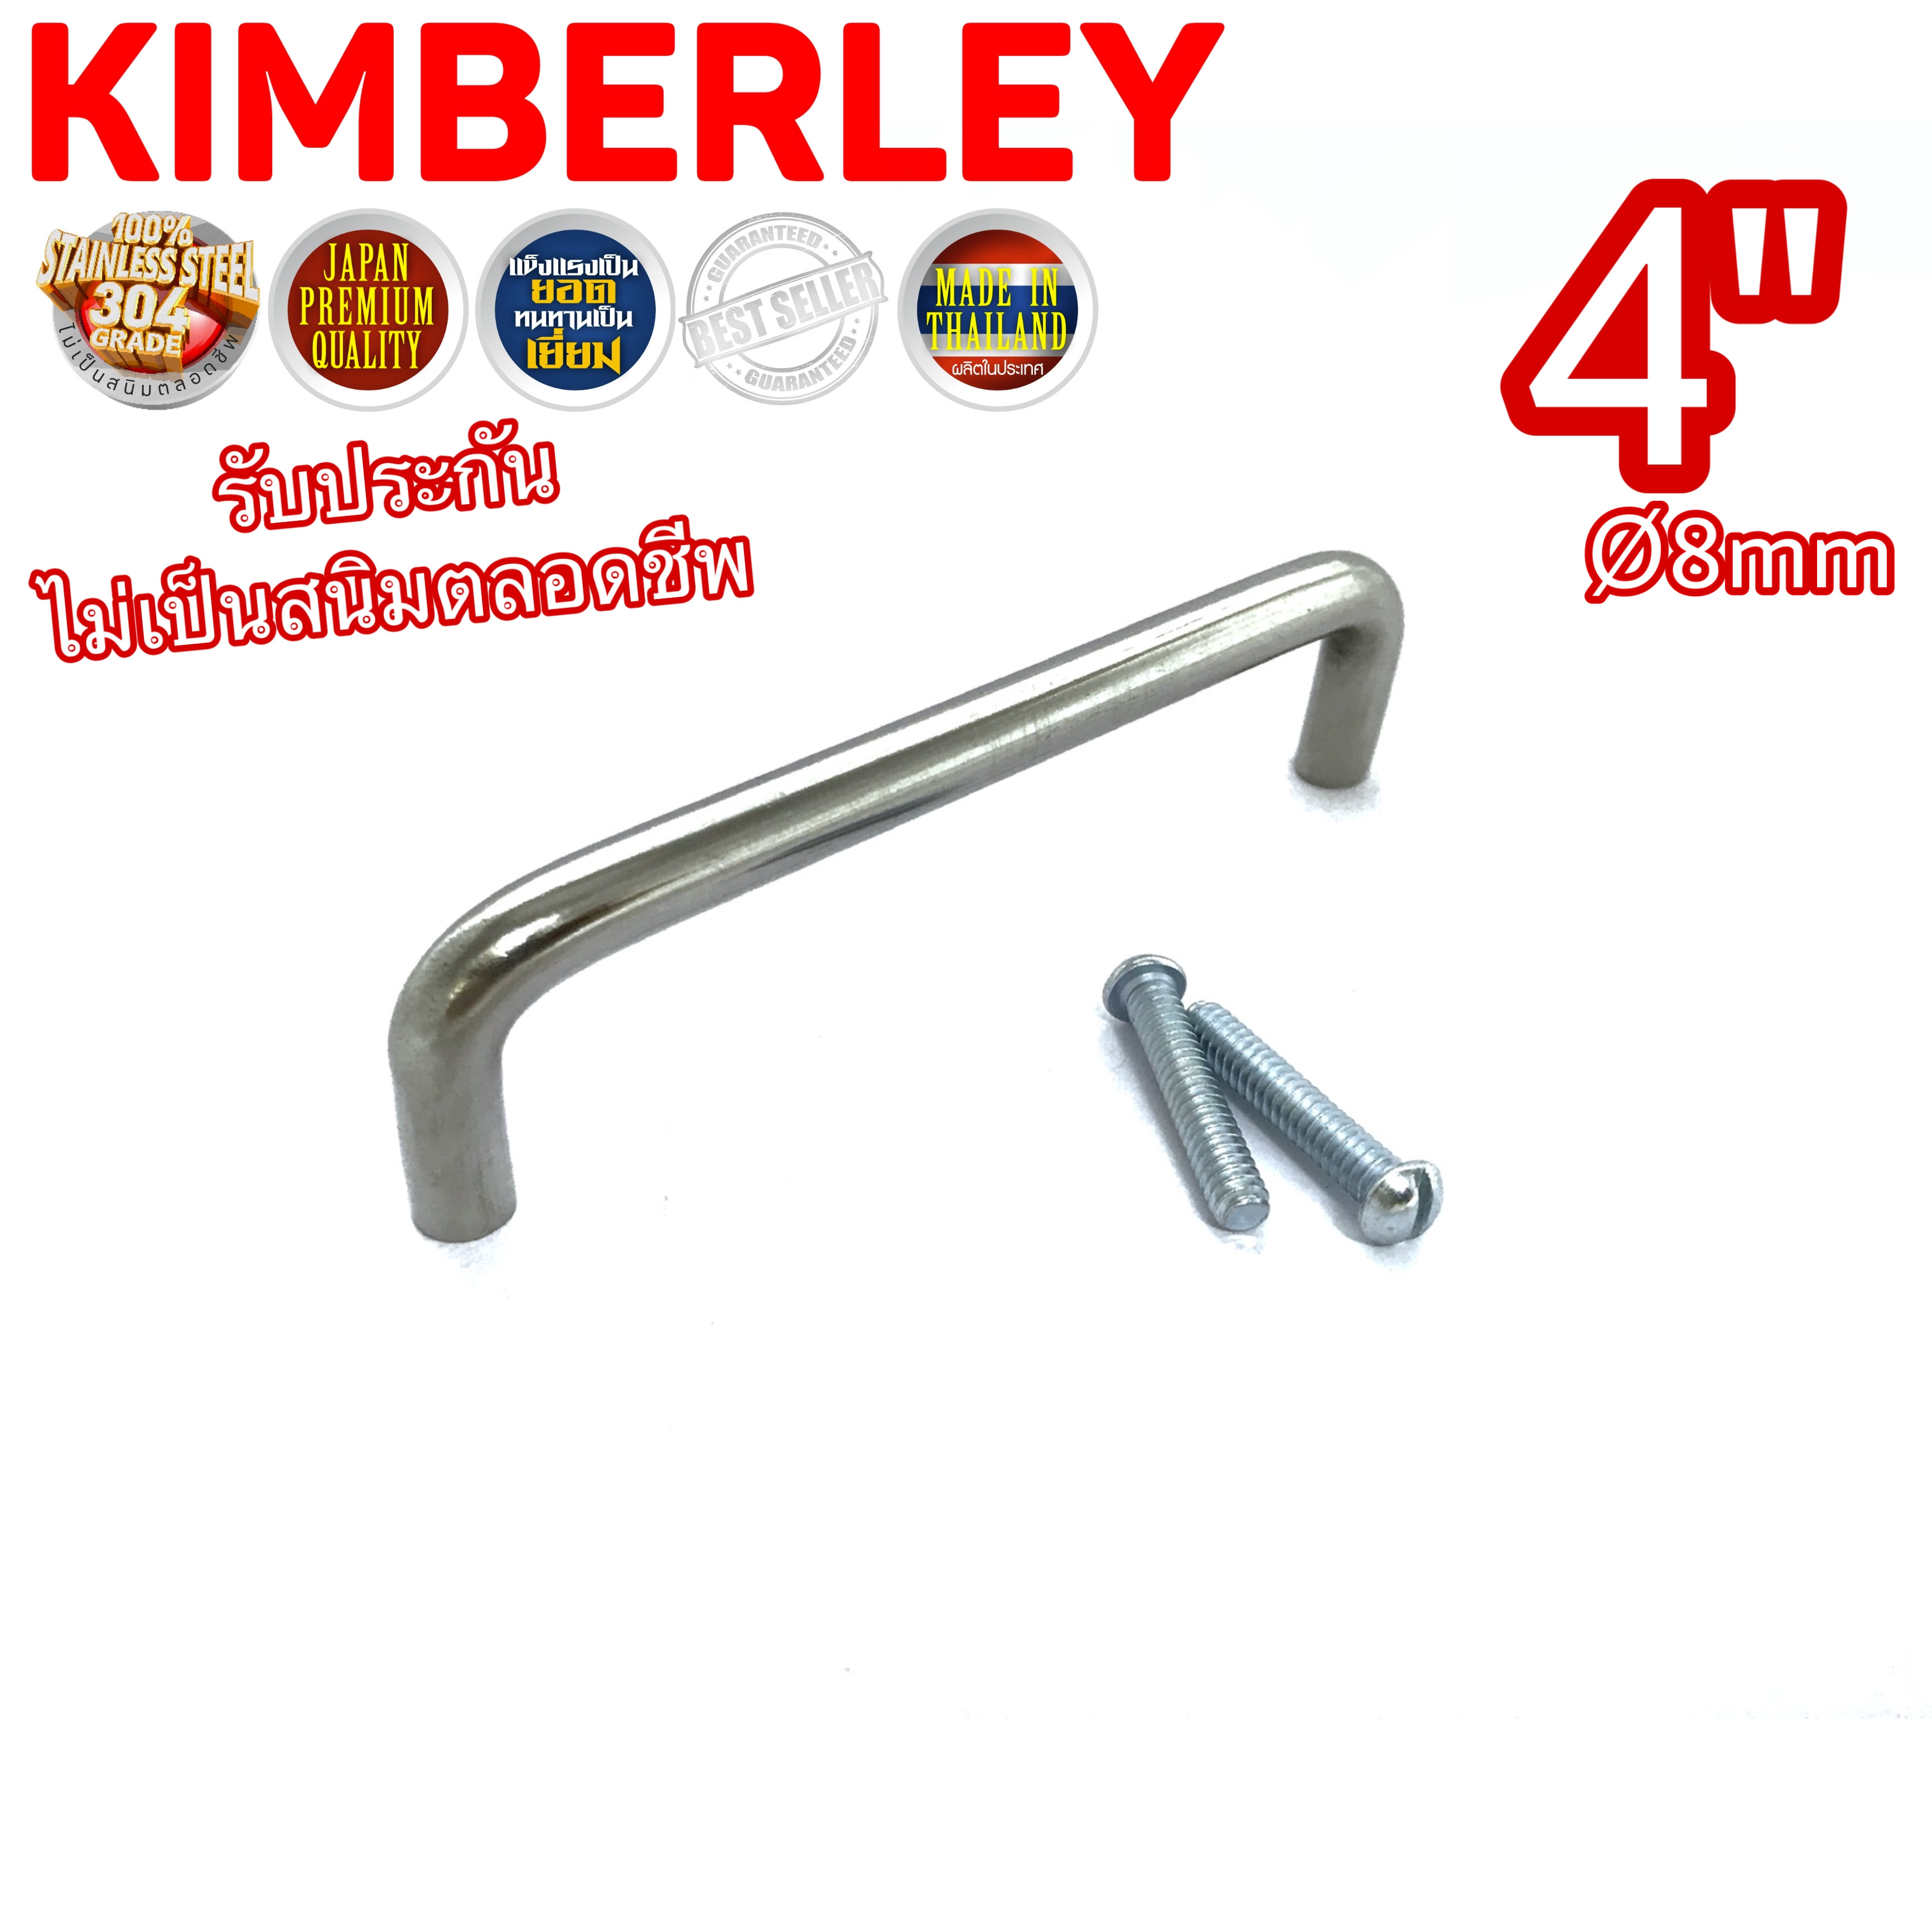 KIMBERLEY มือจับตัว C มือจับลิ้นชัก มือจับตู้ มือจับตู้กับข้าว สแตนเลสแท้ NO.44-4” PS (SUS 304 JAPAN)